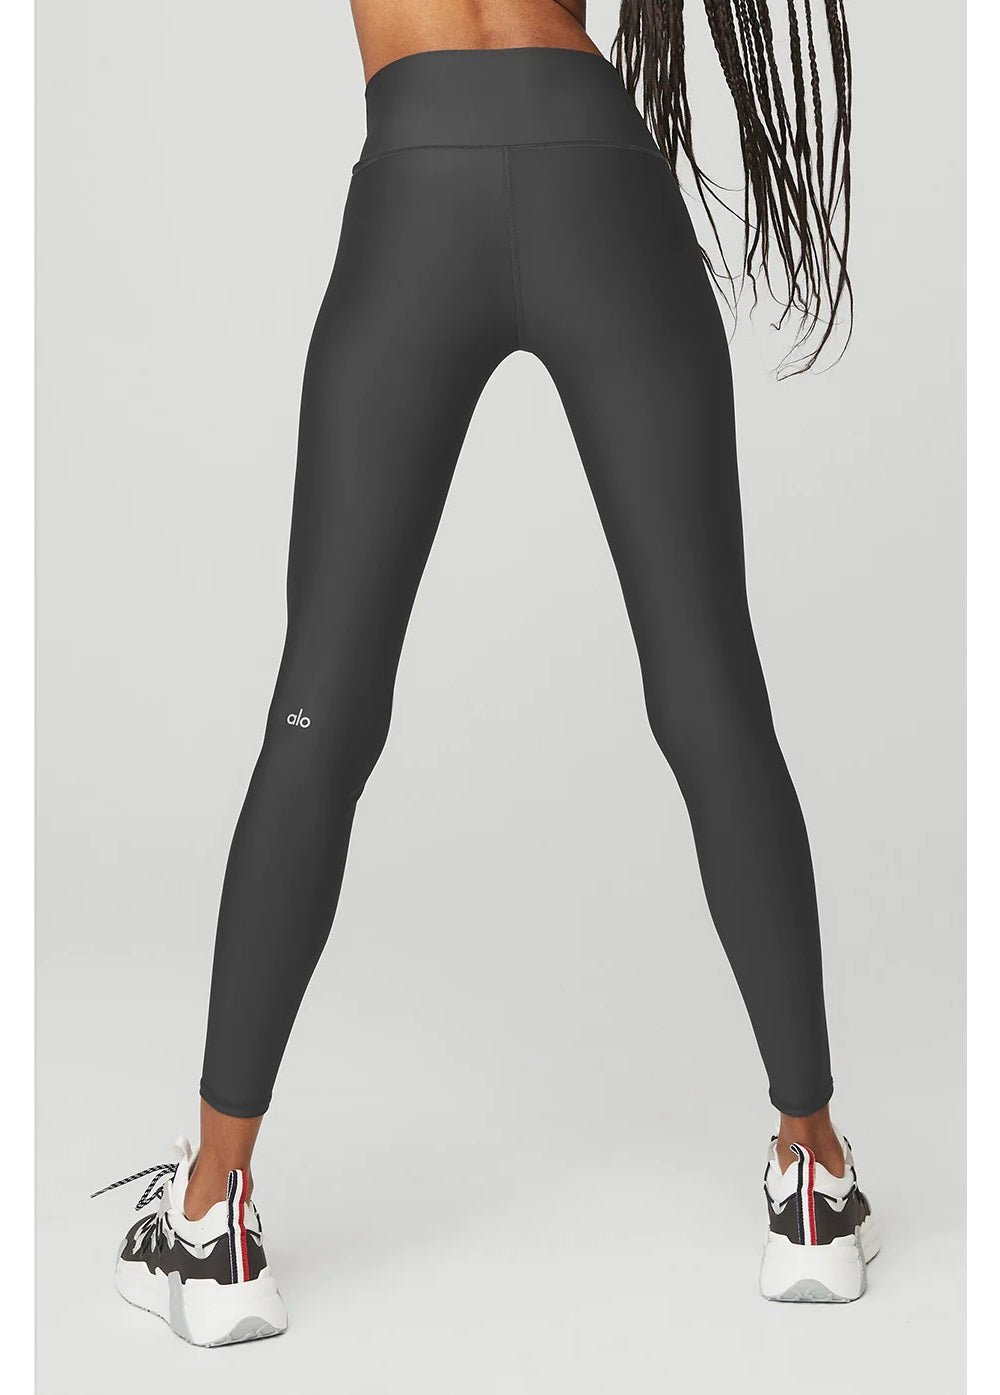 ALO Women's Size S - Black Ripped Leggings Waist Compression Skinny Full  Length